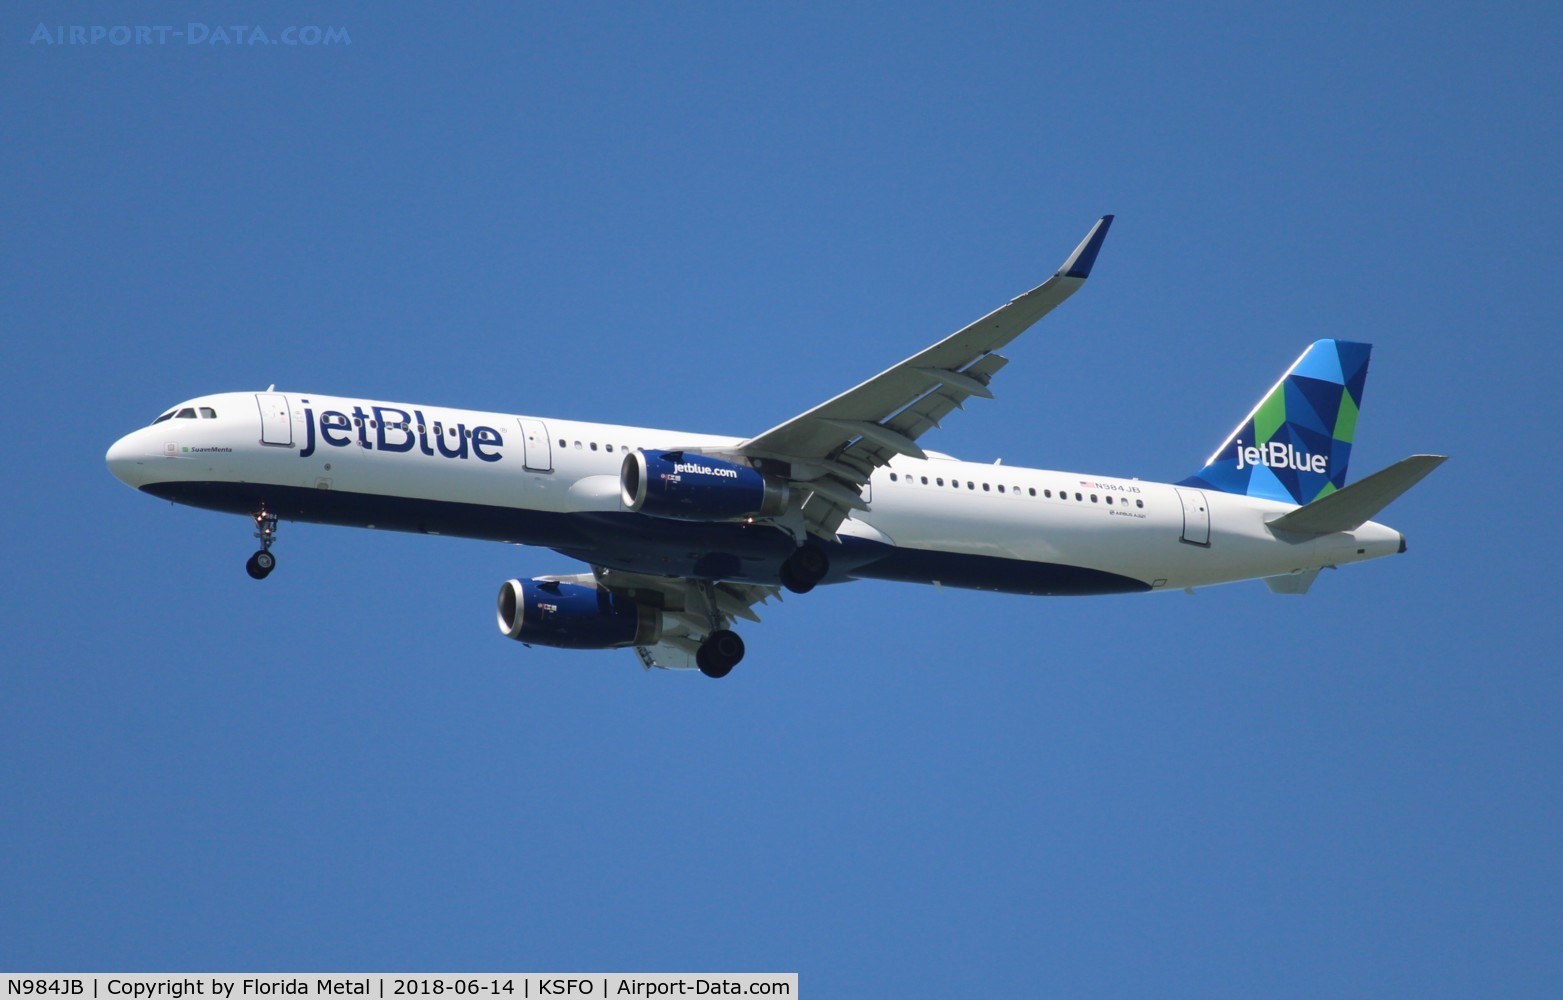 N984JB, 2017 Airbus A321-231 C/N 7815, JetBlue